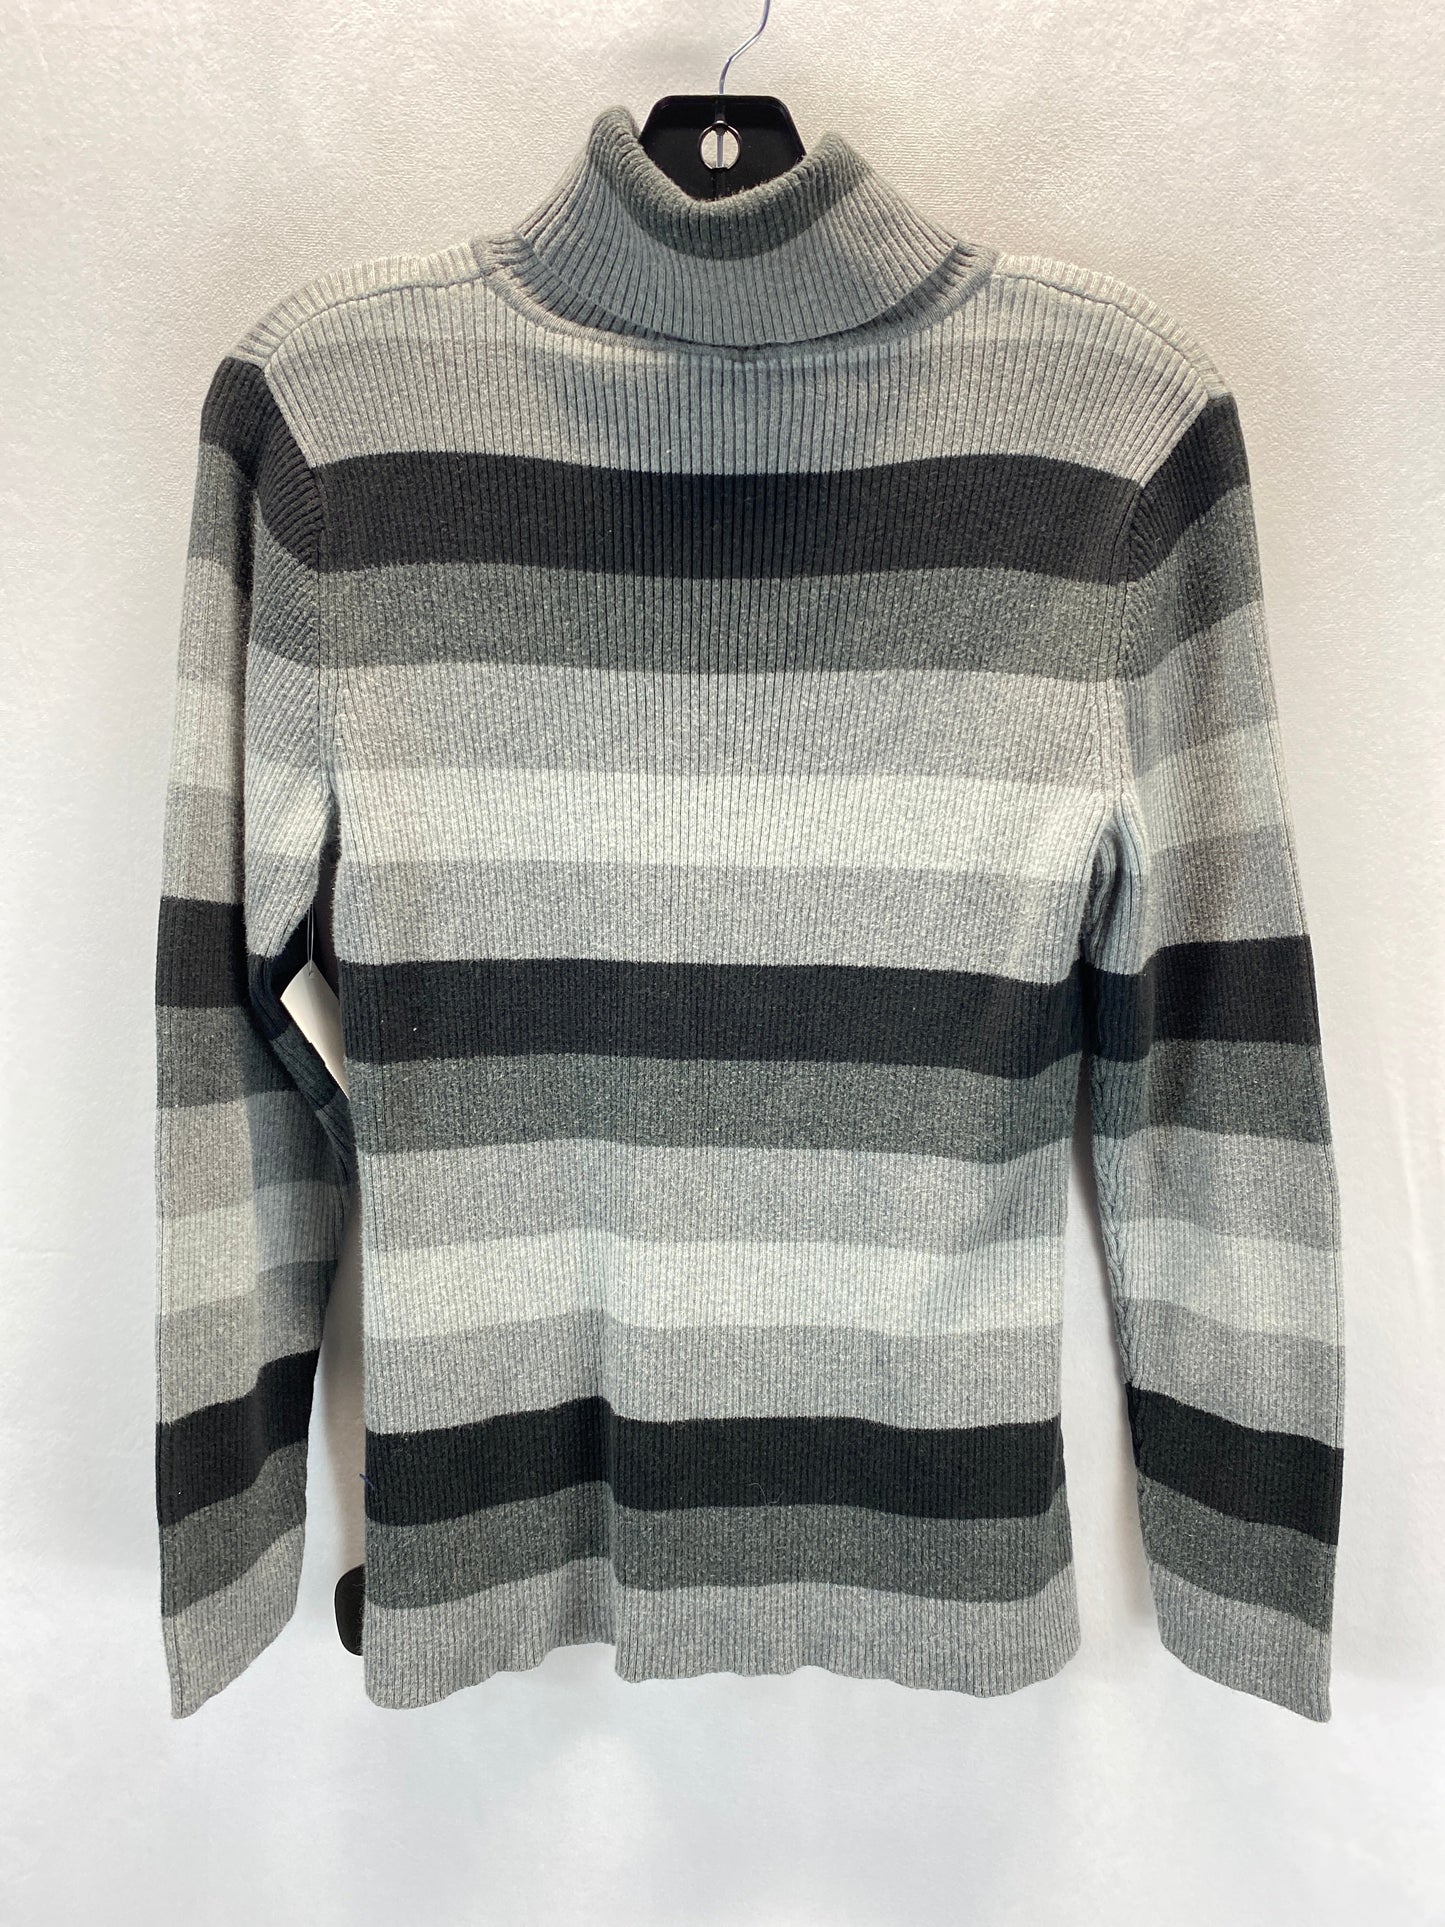 Sweater By Relativity  Size: Xl